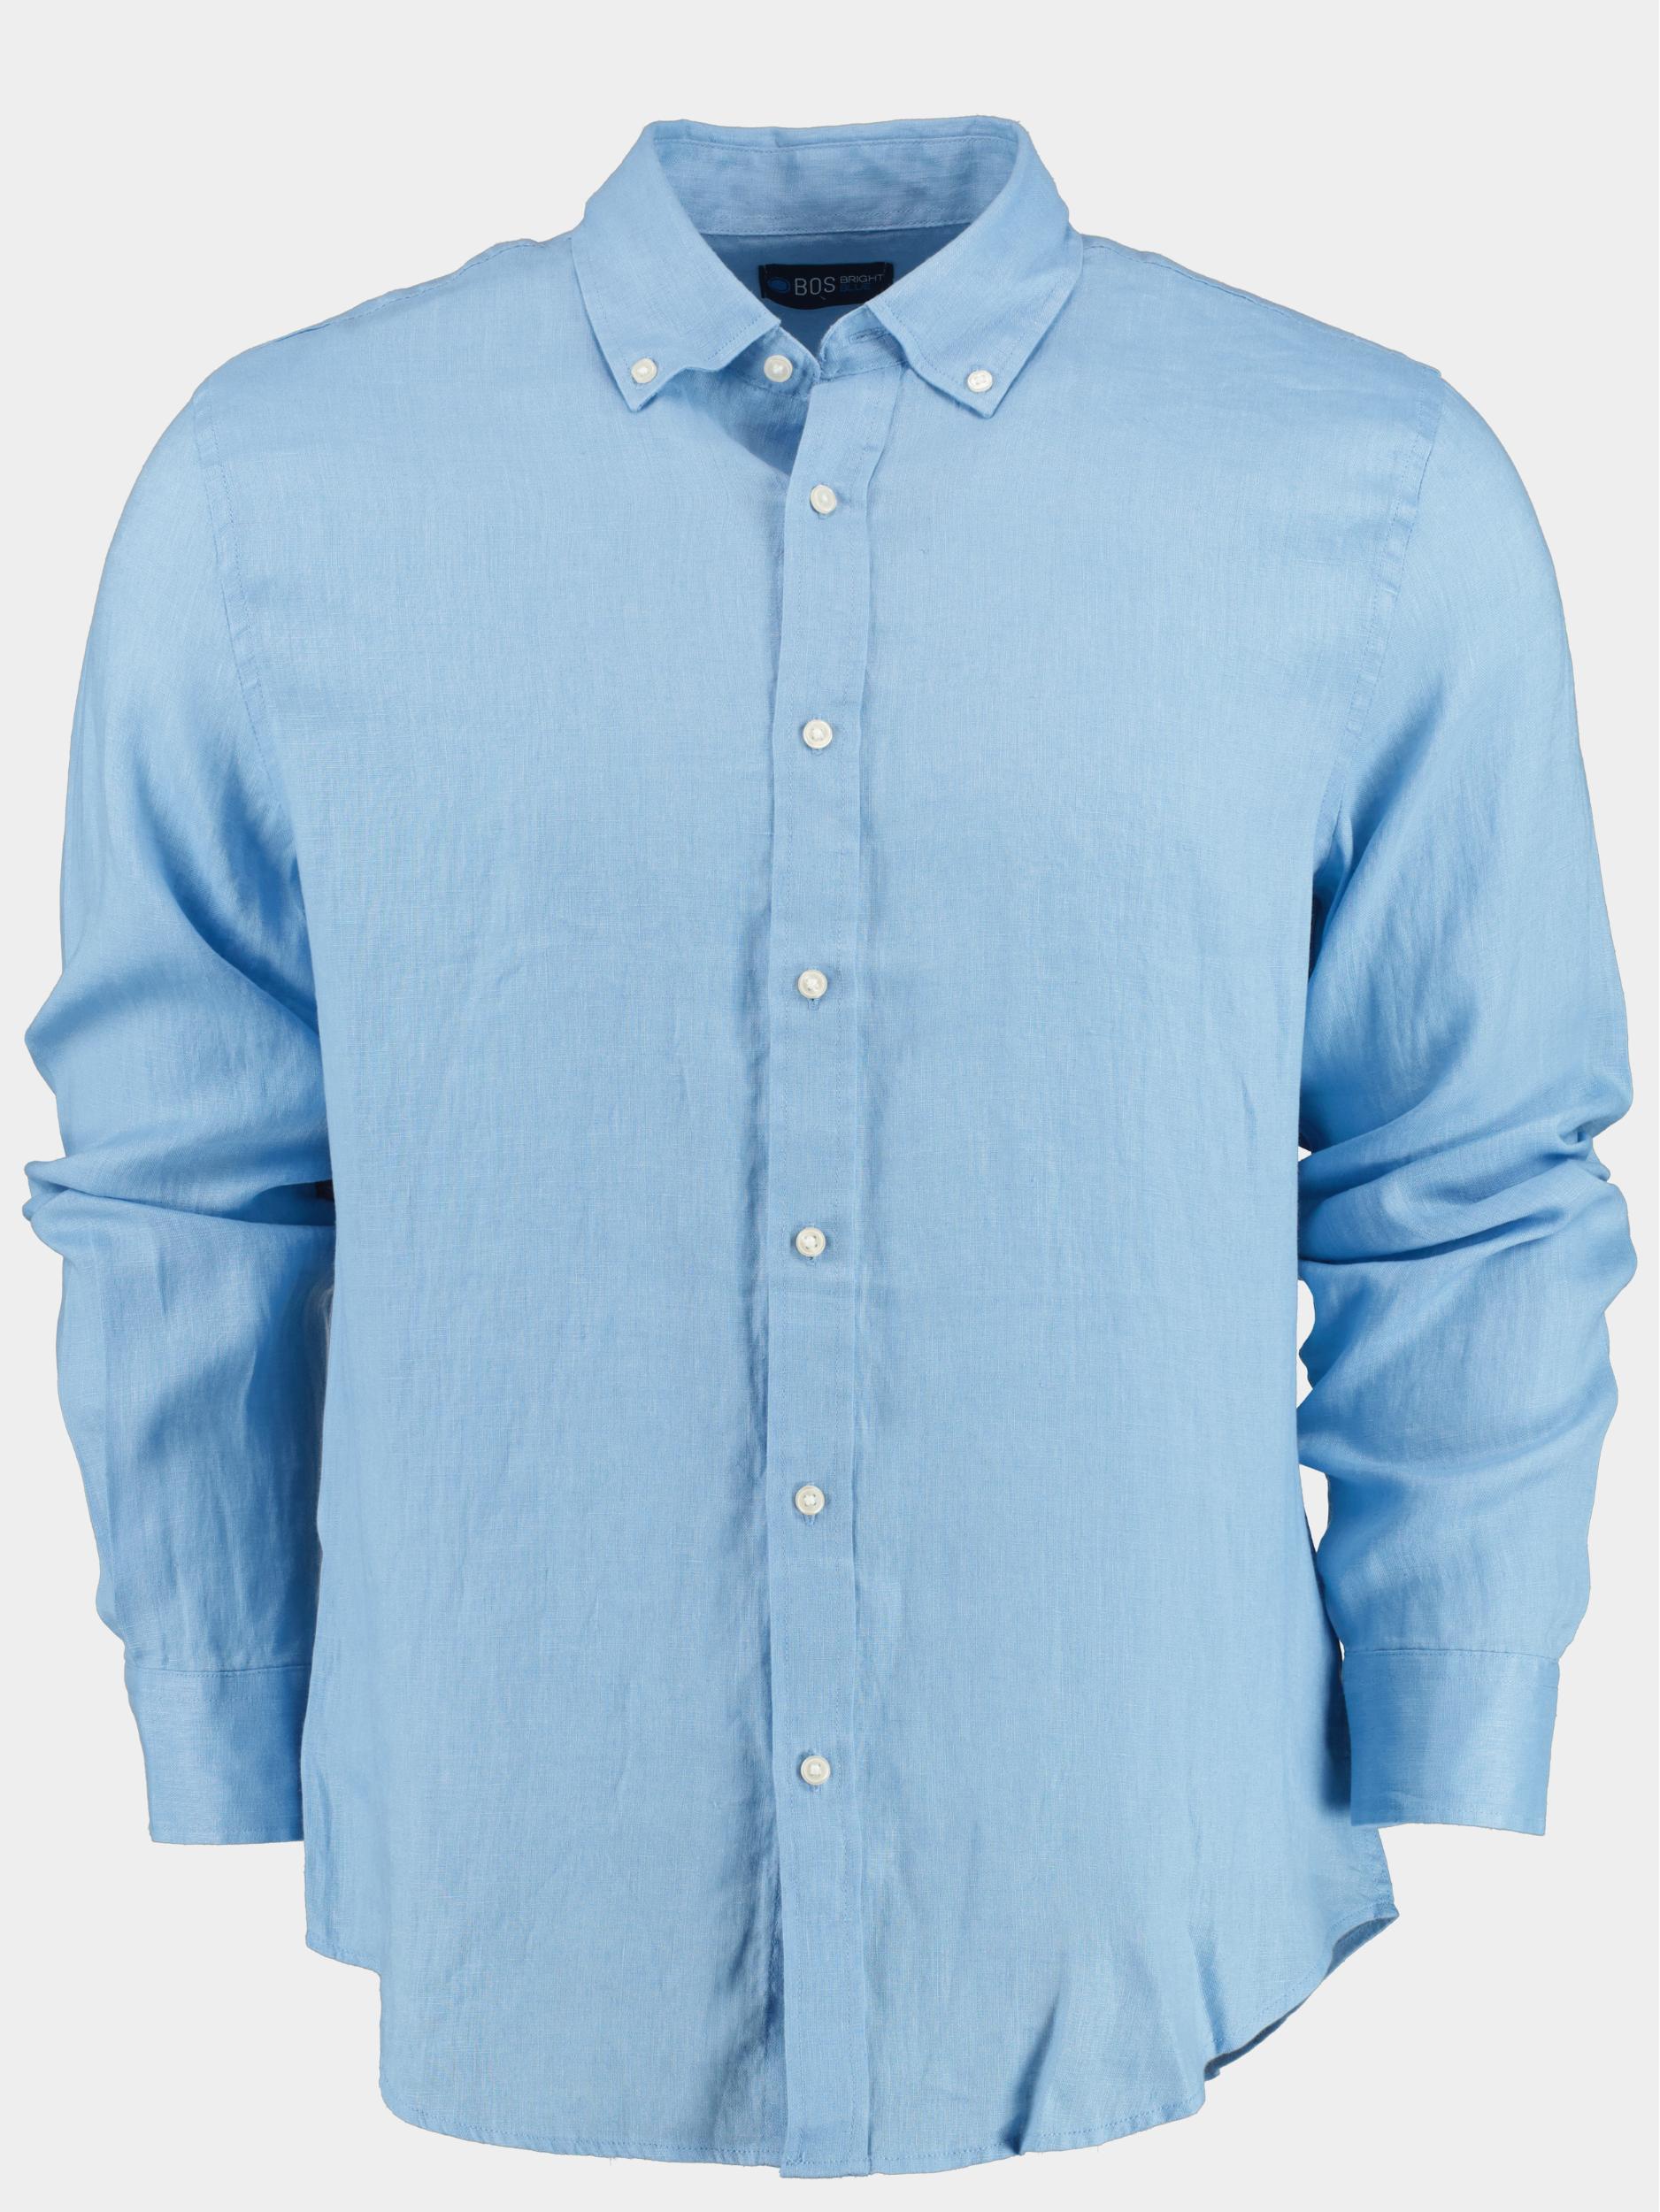 Bos Bright Blue Casual hemd lange mouw Blauw Linnen shirt slim fit 9435900/240